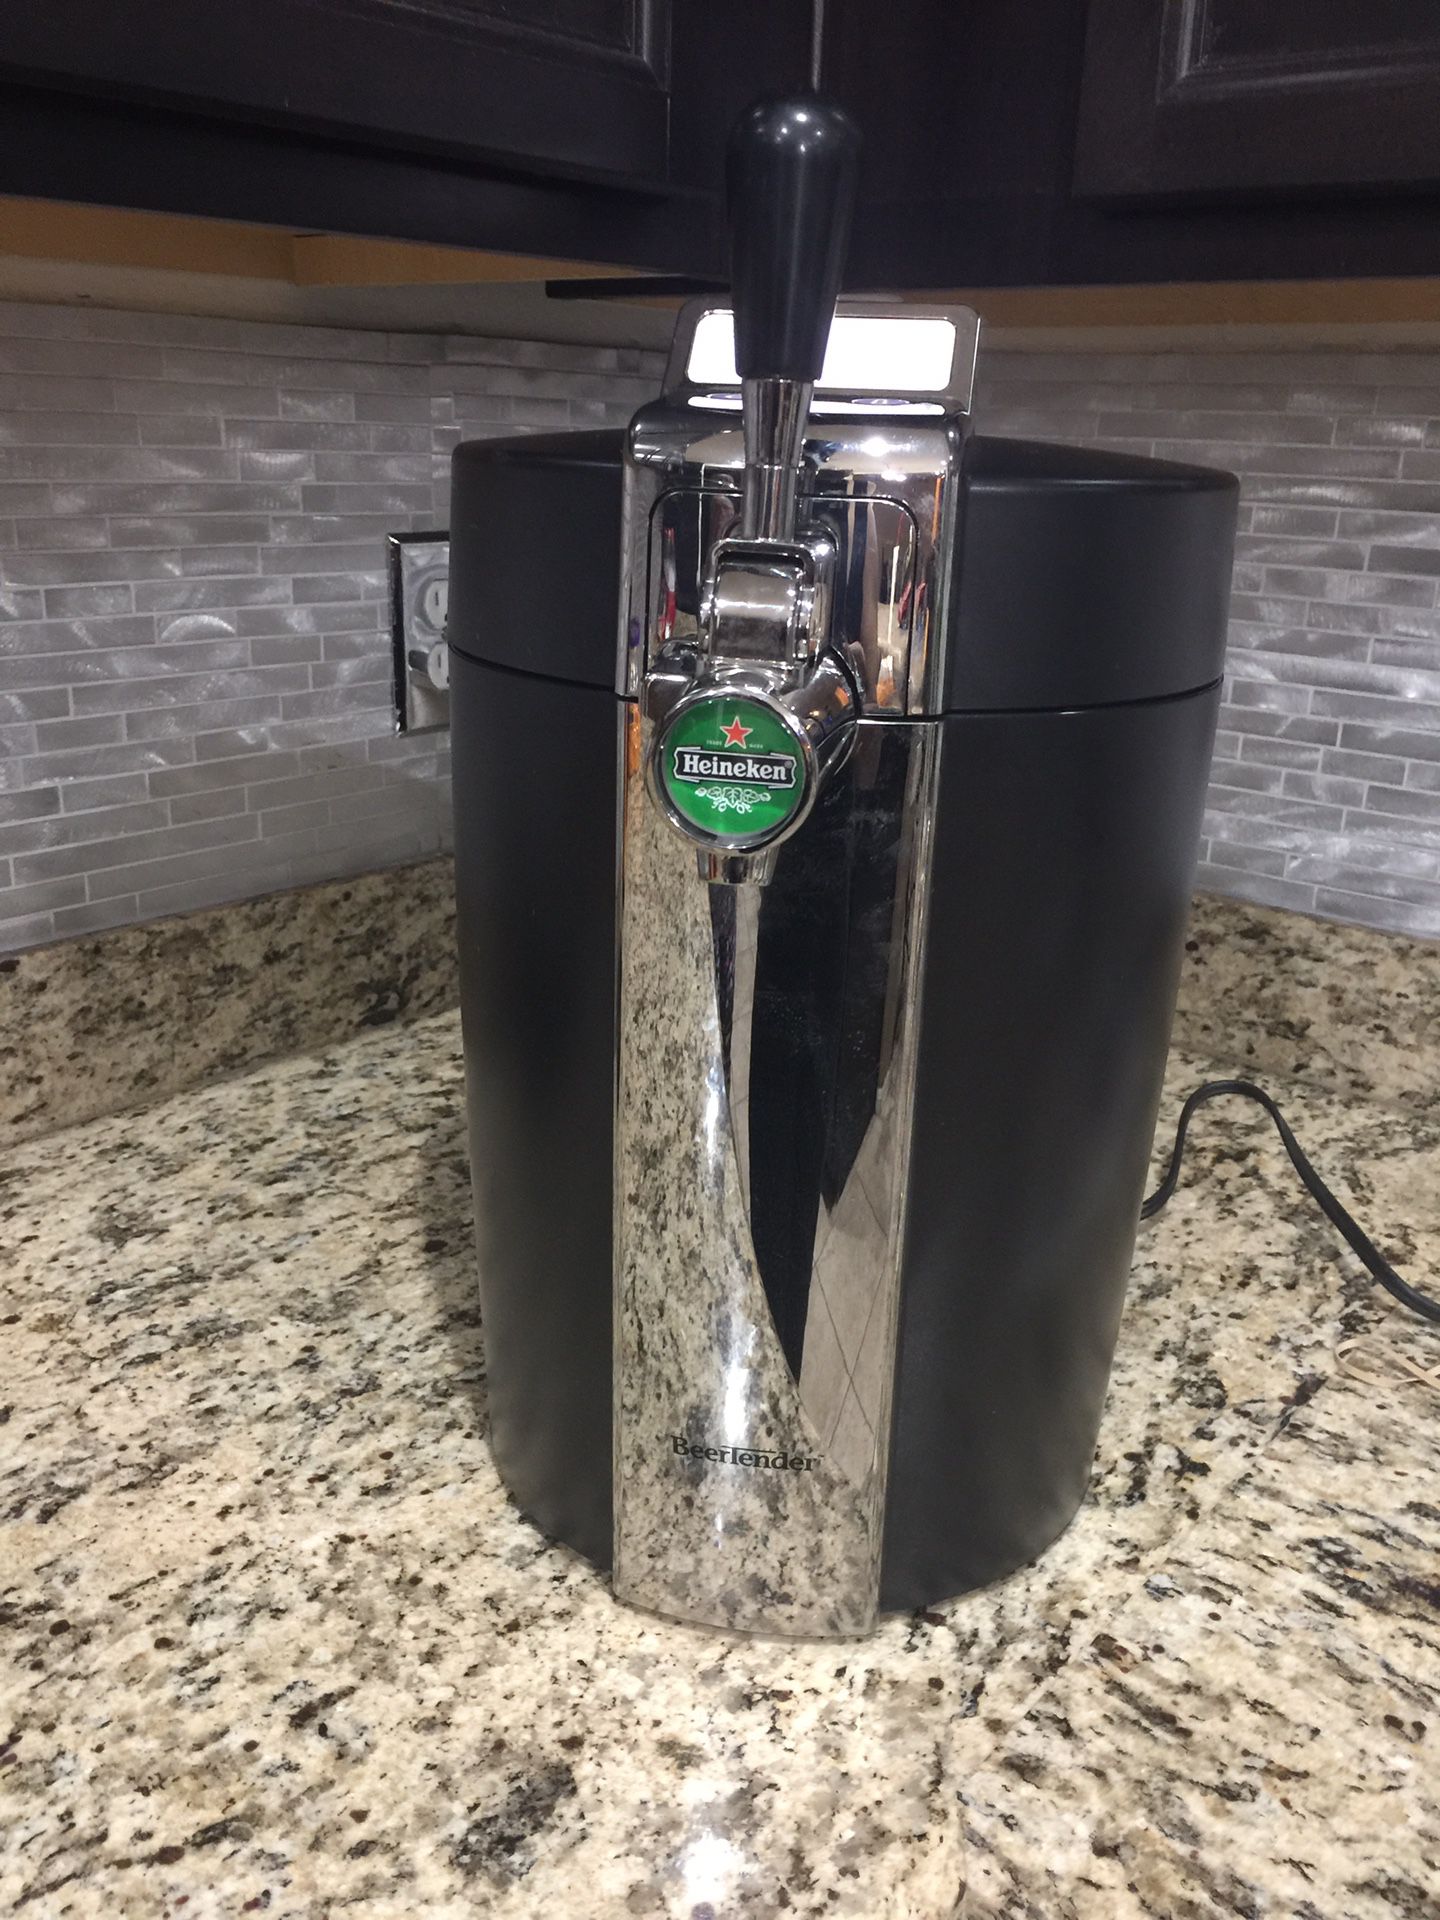 Heineken Mini Keg Cooler - Super Bowl Special